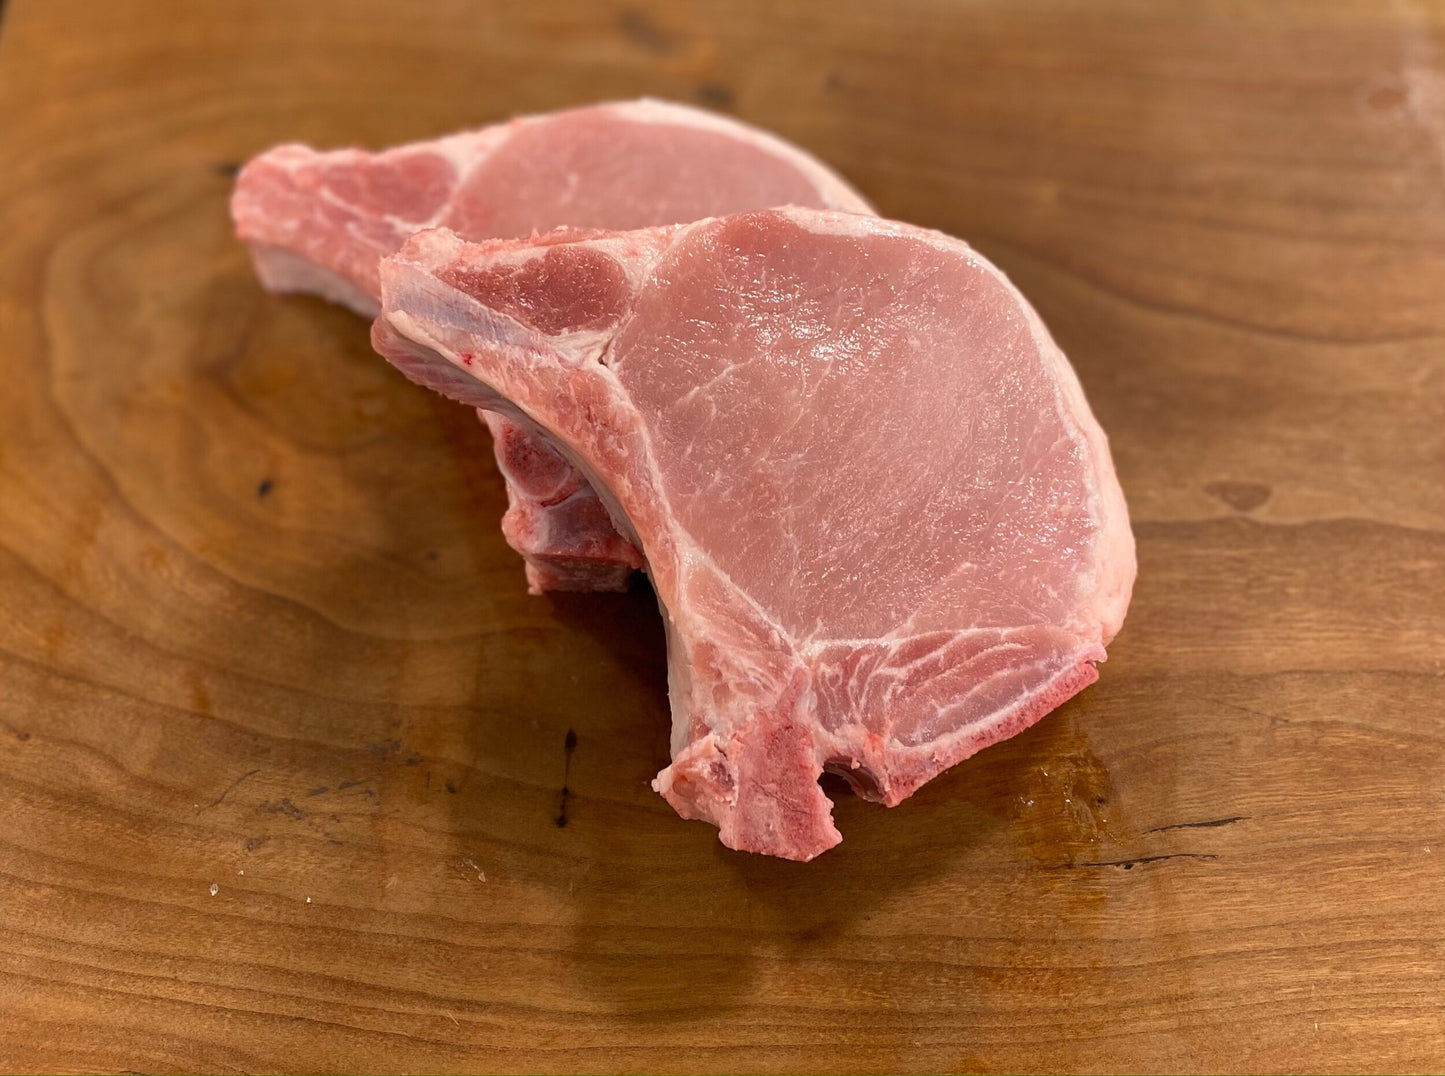 Bone-In Center Cut Pork Chops (10 oz each)